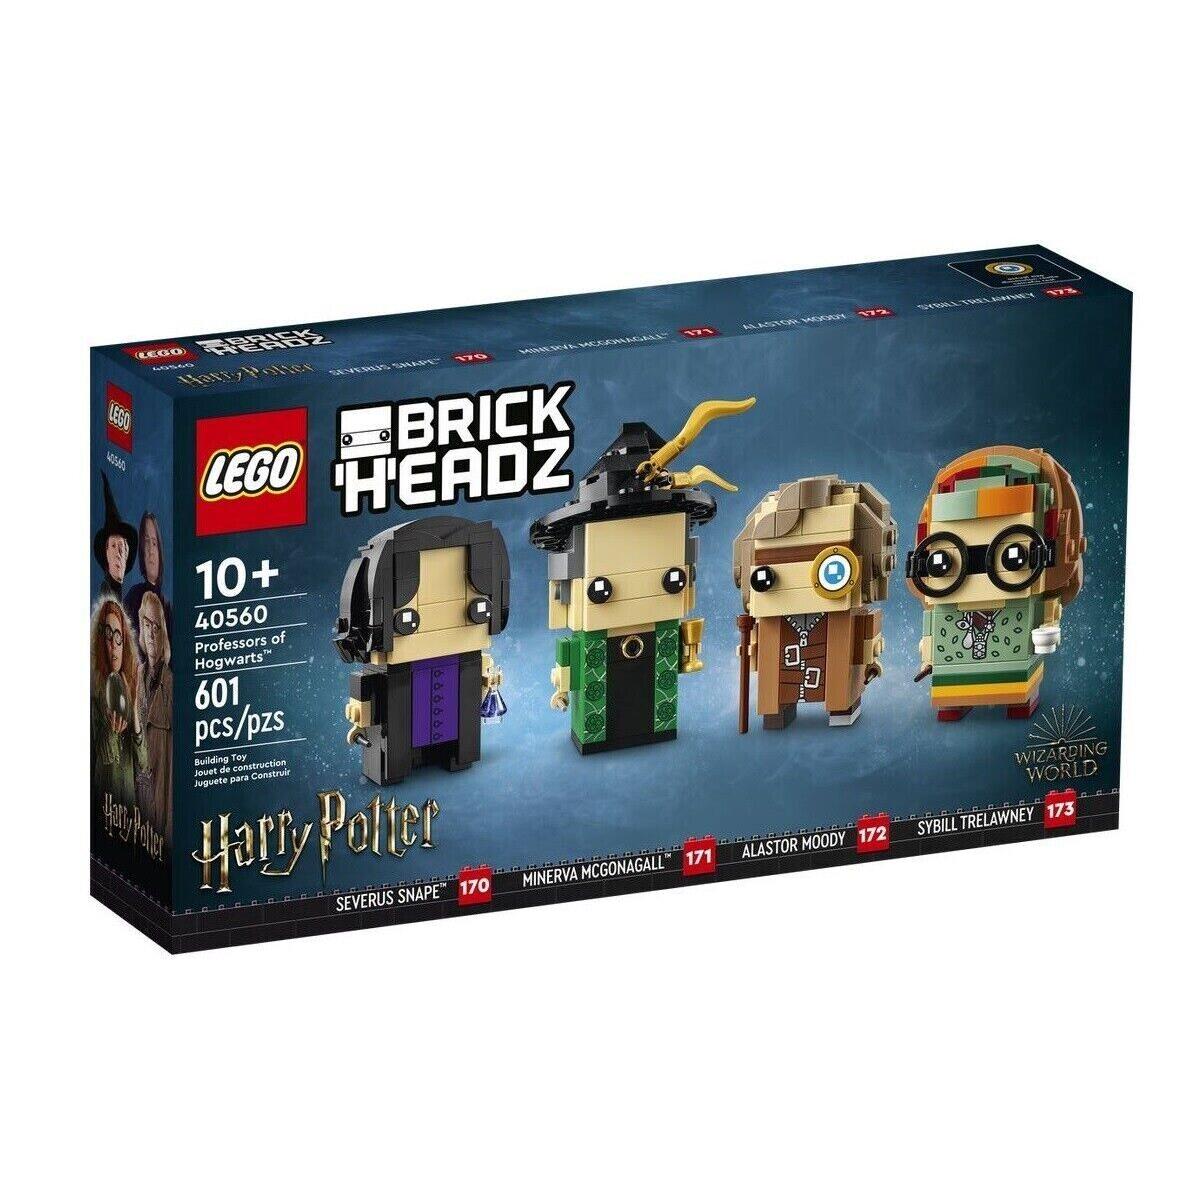 Lego 40560 Harry Potter Professors of Hogwarts Perfect Box Guarantee